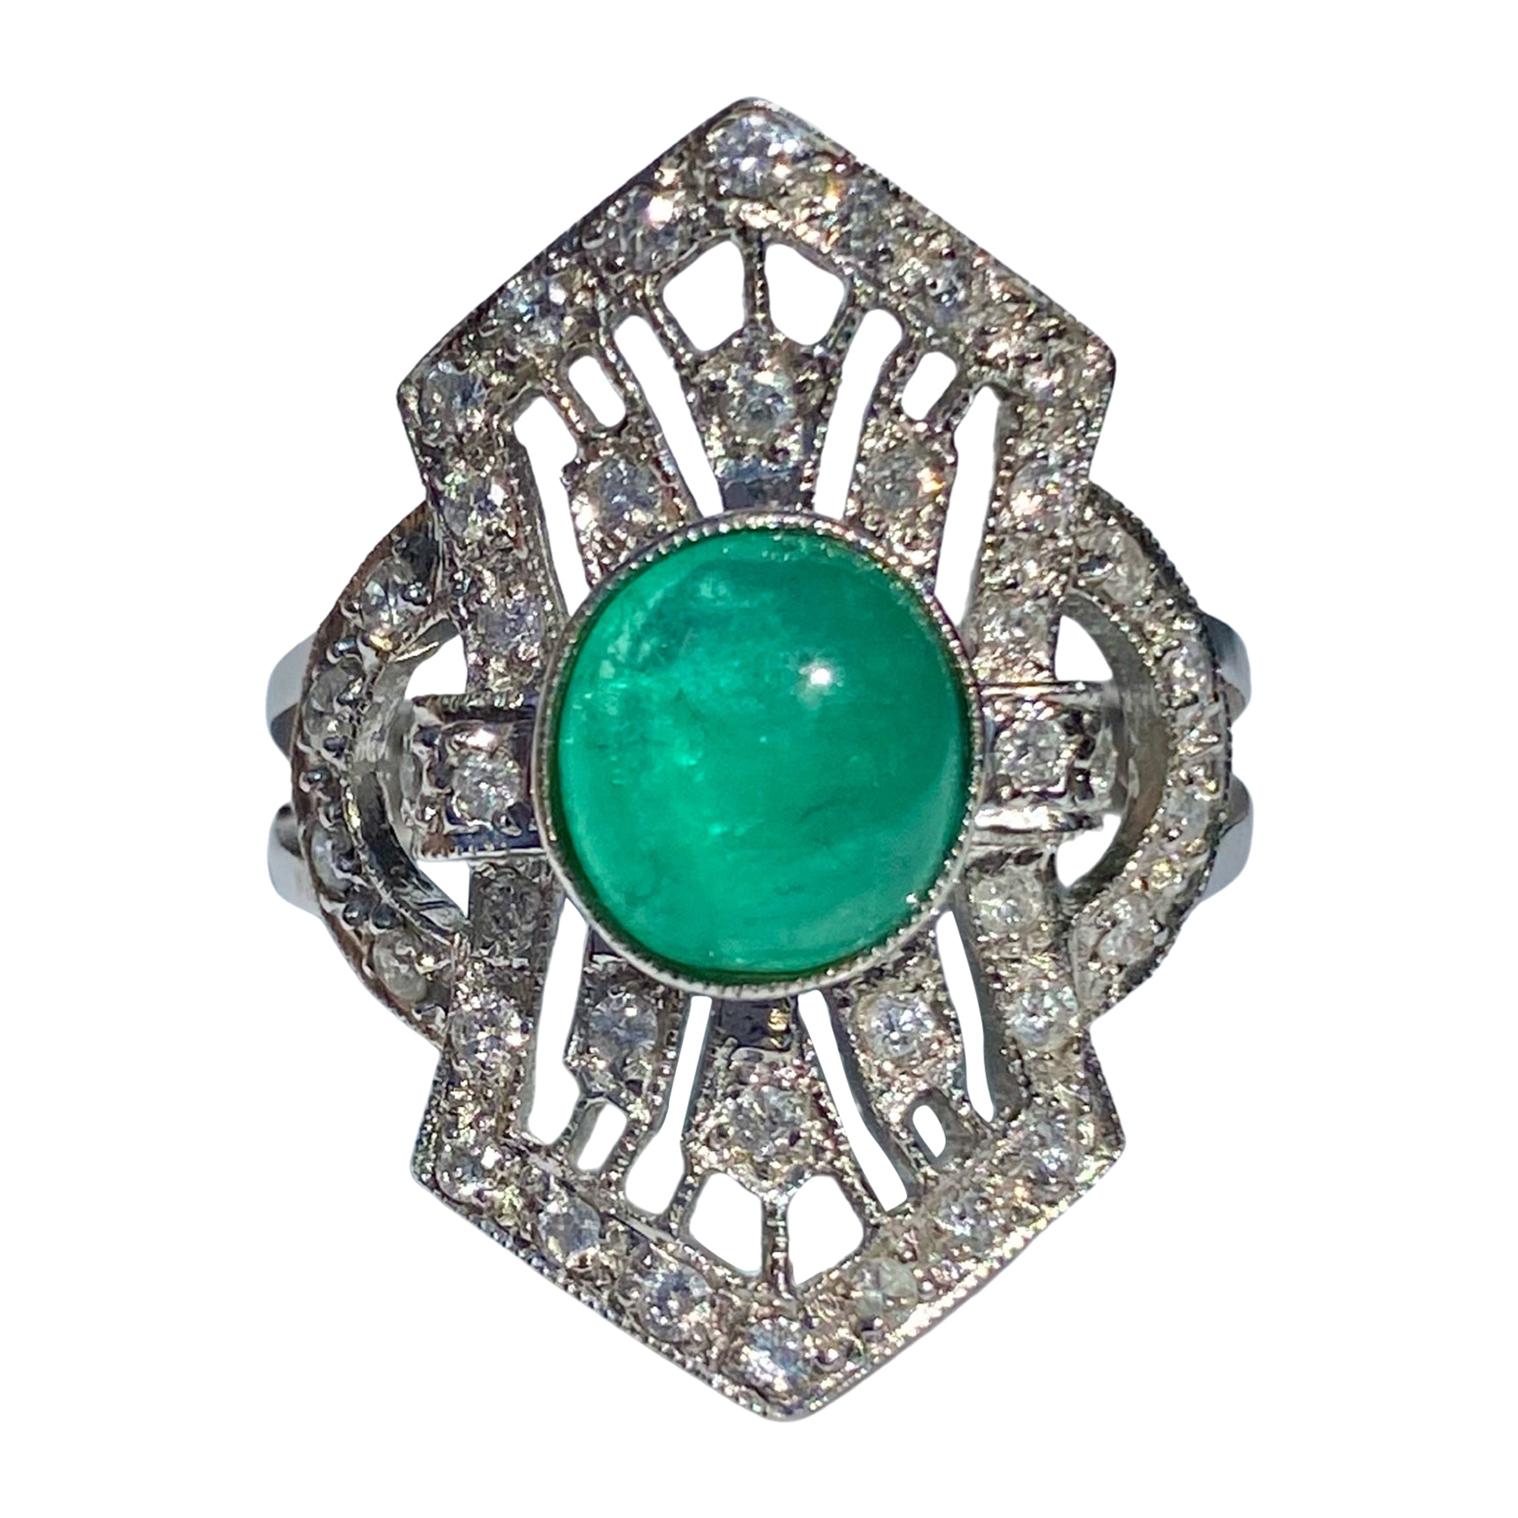 1.40 Carat Cabochon Cut Colombian Emerald, Diamond and 14 Karat White Gold Ring